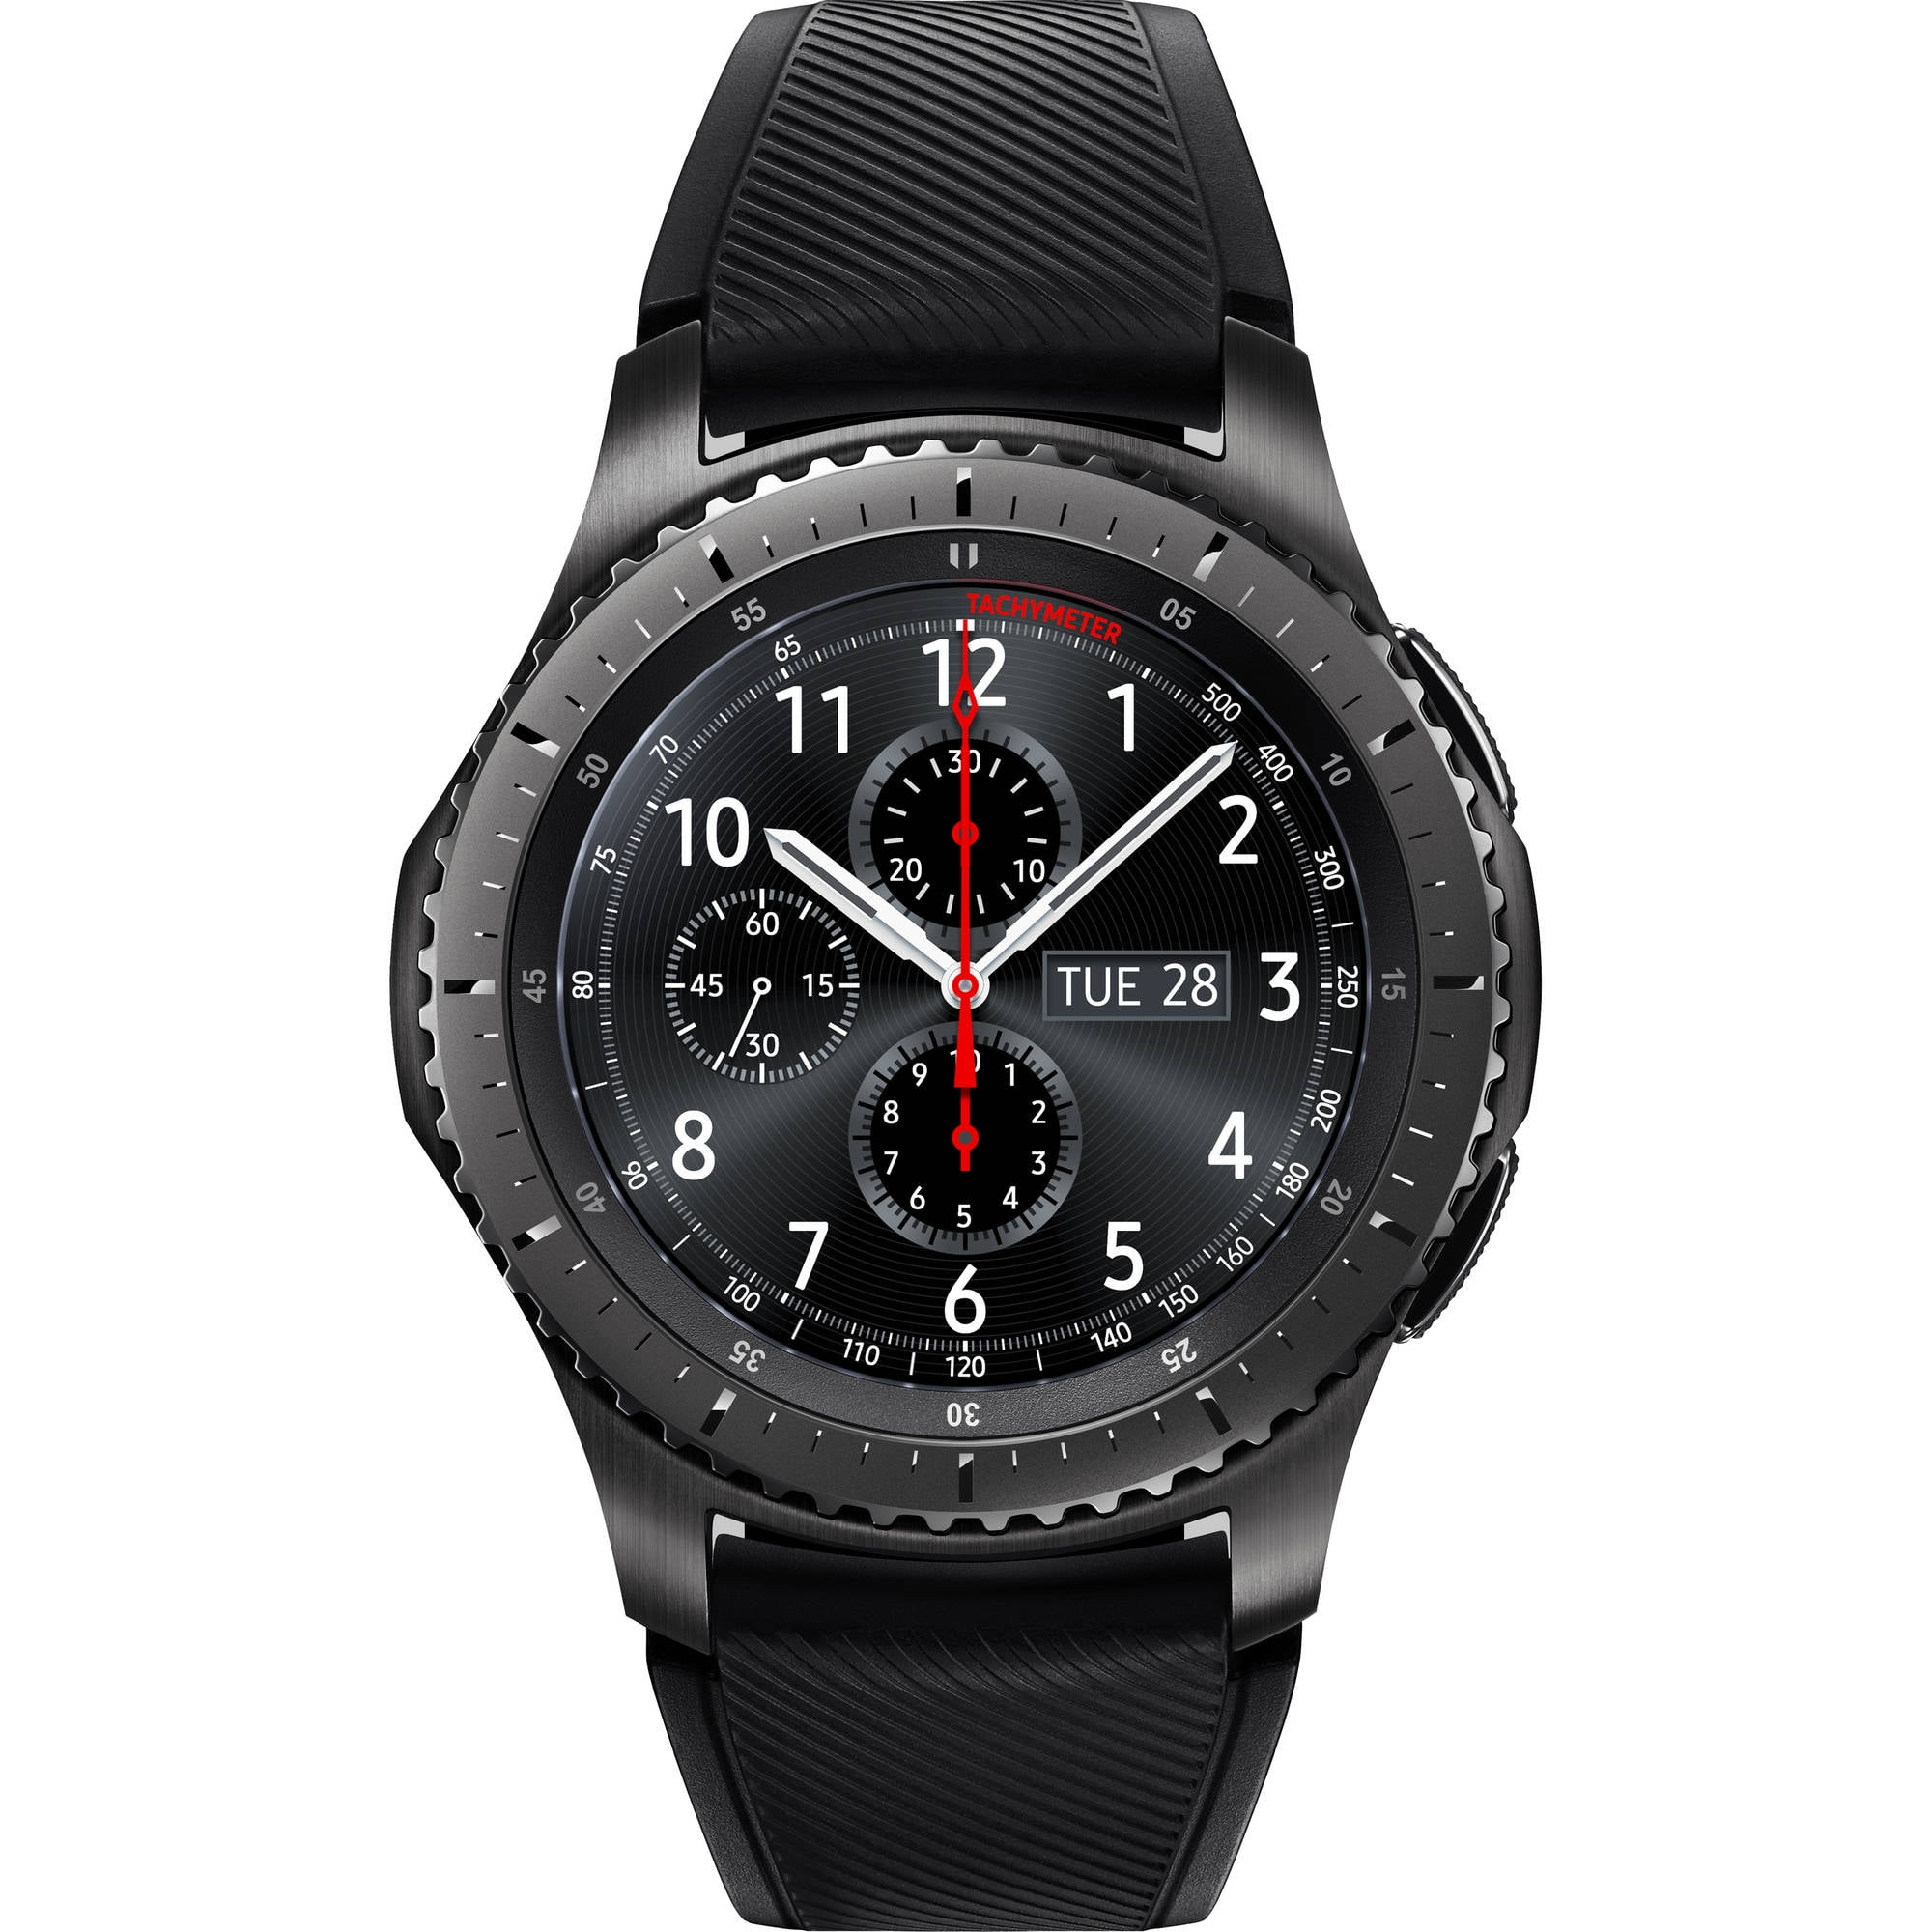 SAMSUNG Gear S3 Frontier Smart Watch Black - SM-R760NDAAXAR - Walmart.com